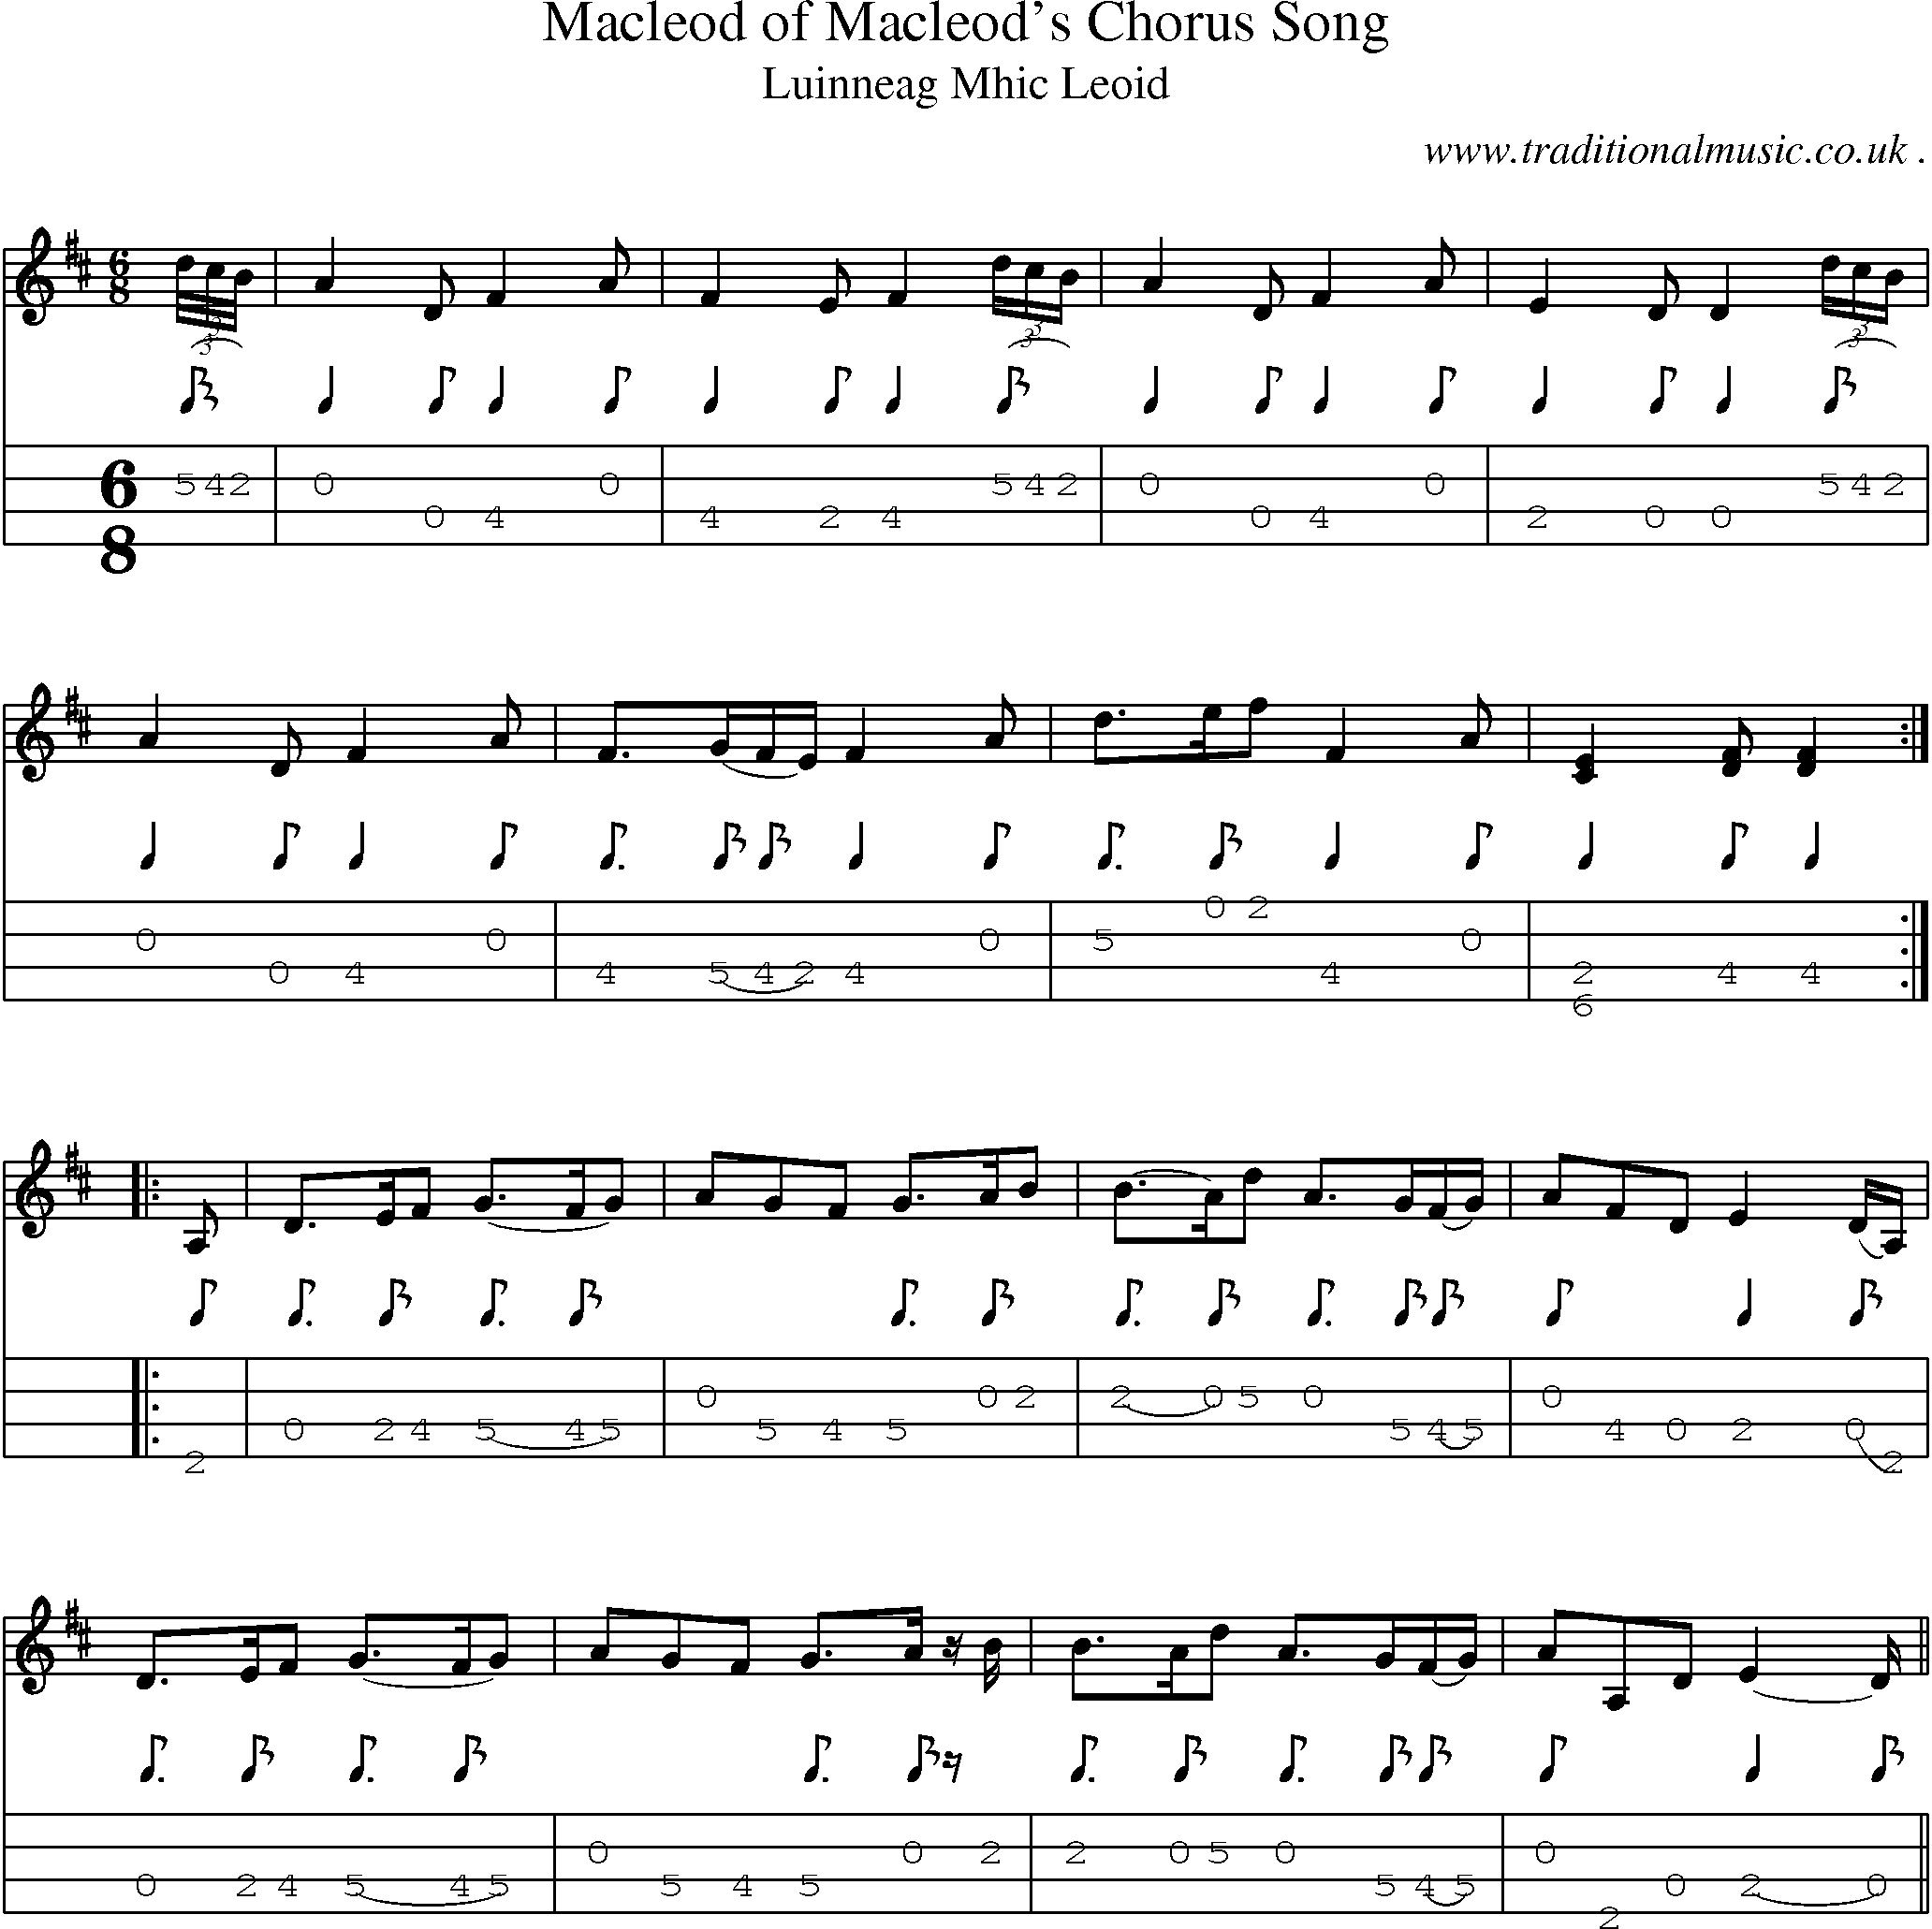 Sheet-music  score, Chords and Mandolin Tabs for Macleod Of Macleods Chorus Song